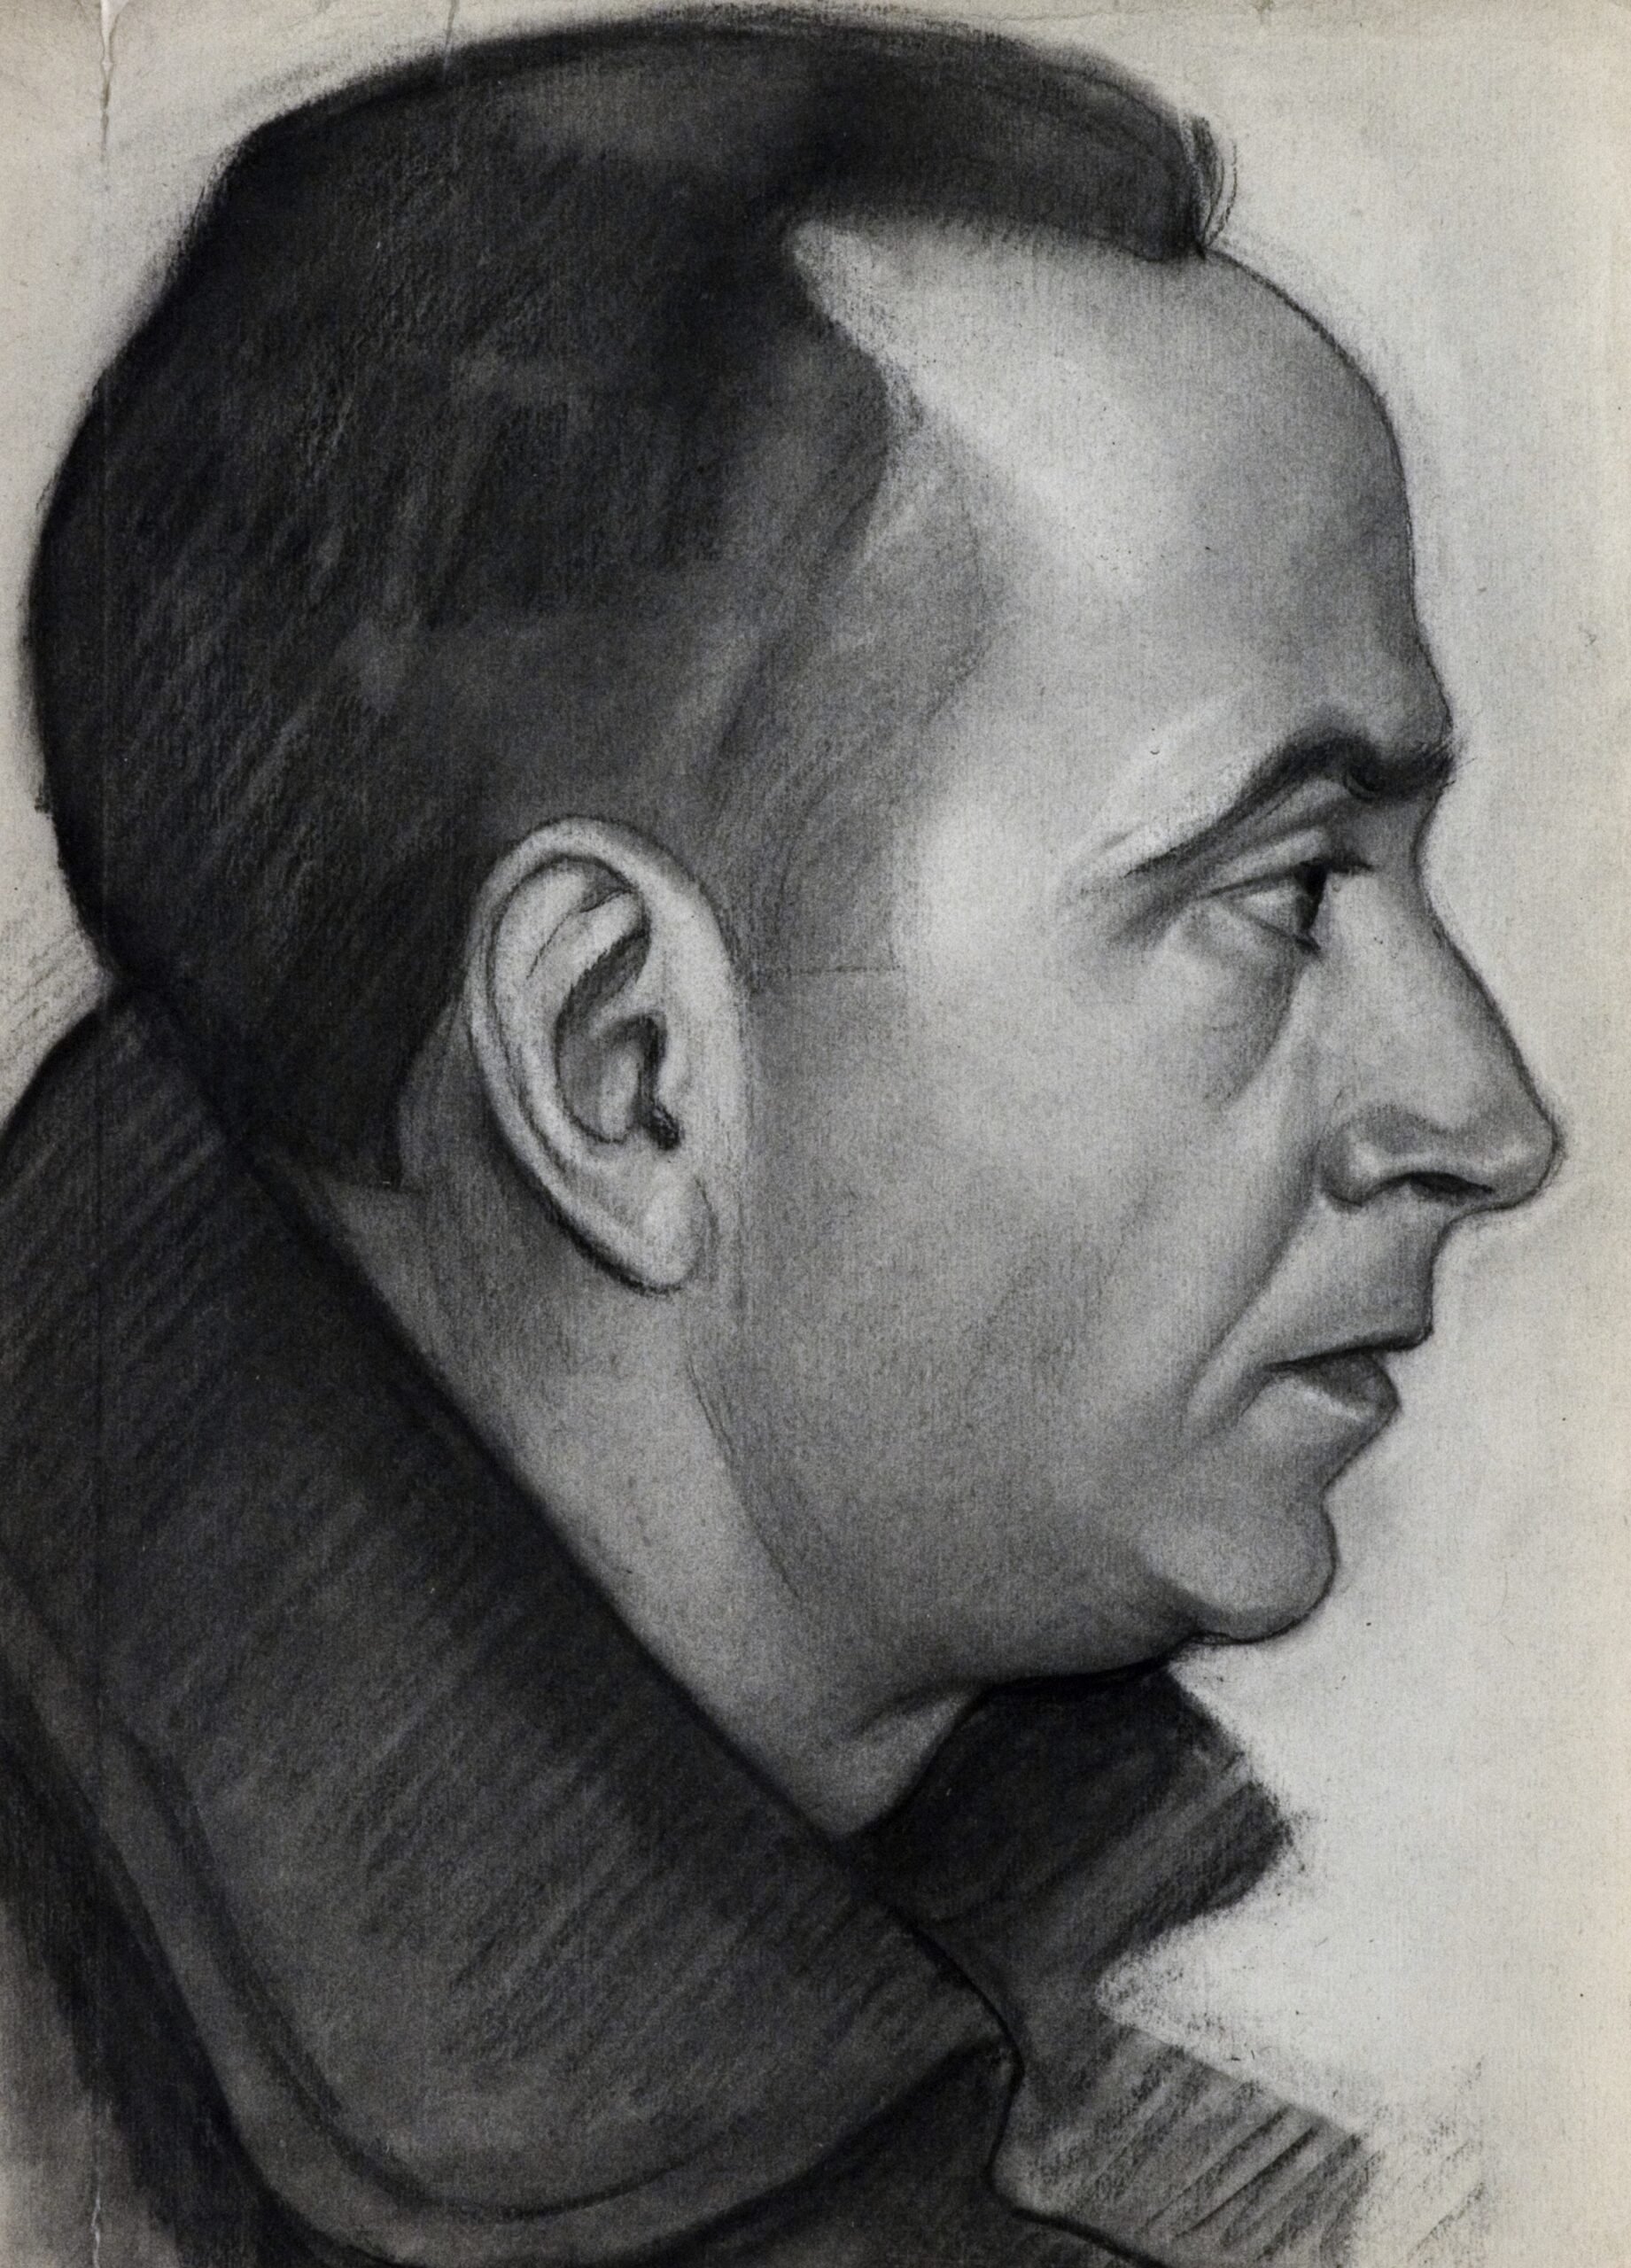 Dibujo de José Manaut titulado Pintos Fonseca (escrito en reverso), retrato perfil, 1943. Carboncillo sobre papel.